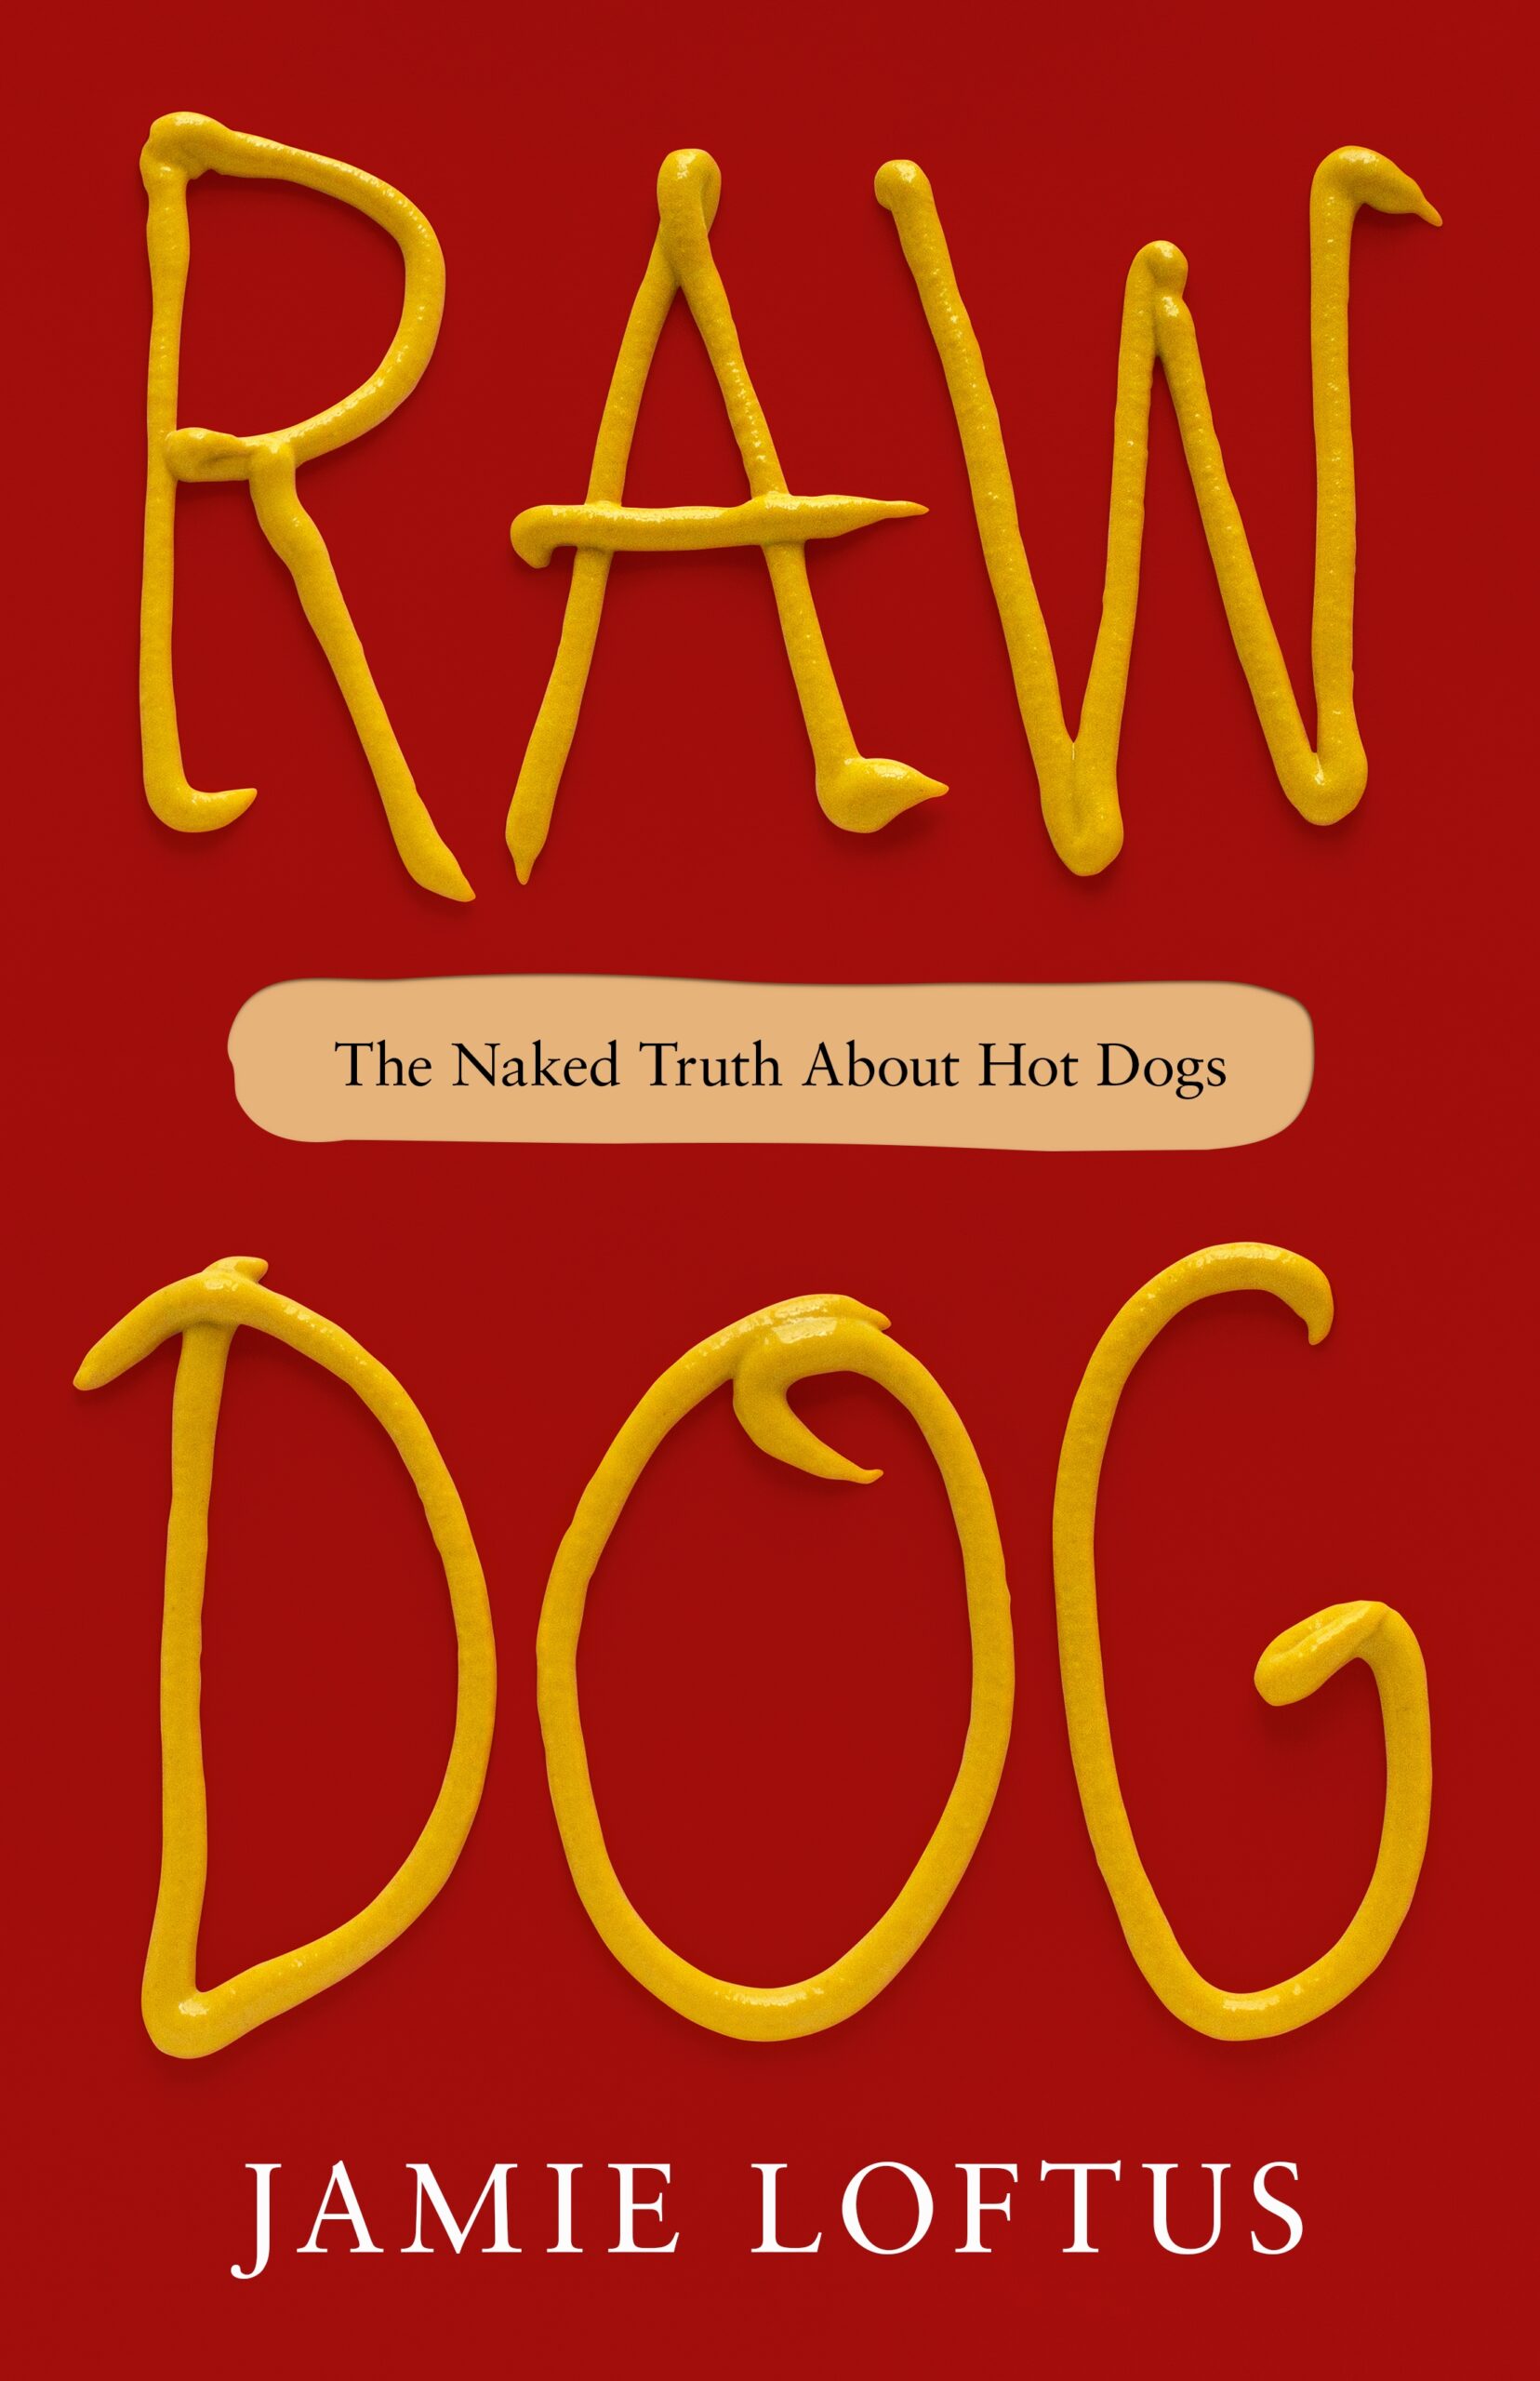 Raw Dog by Jamie Loftus